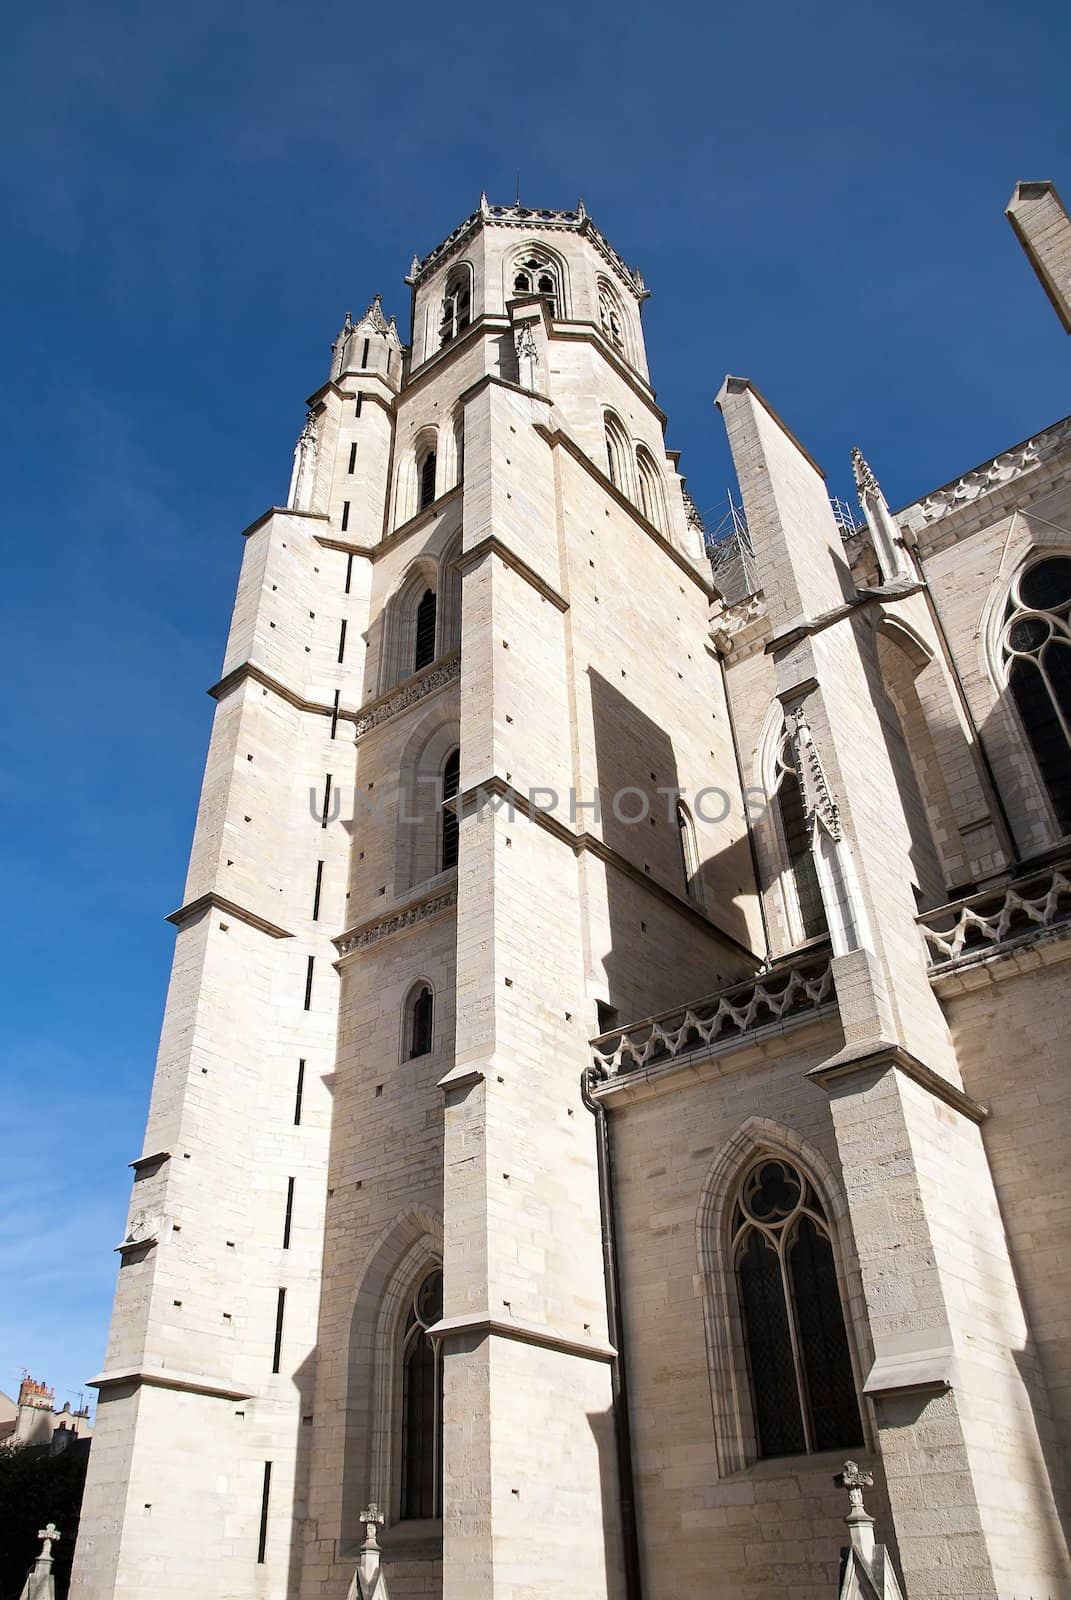 Cathedral Saint Bénigne (Dijon Côte-d'Or Burgundy France) by neko92vl